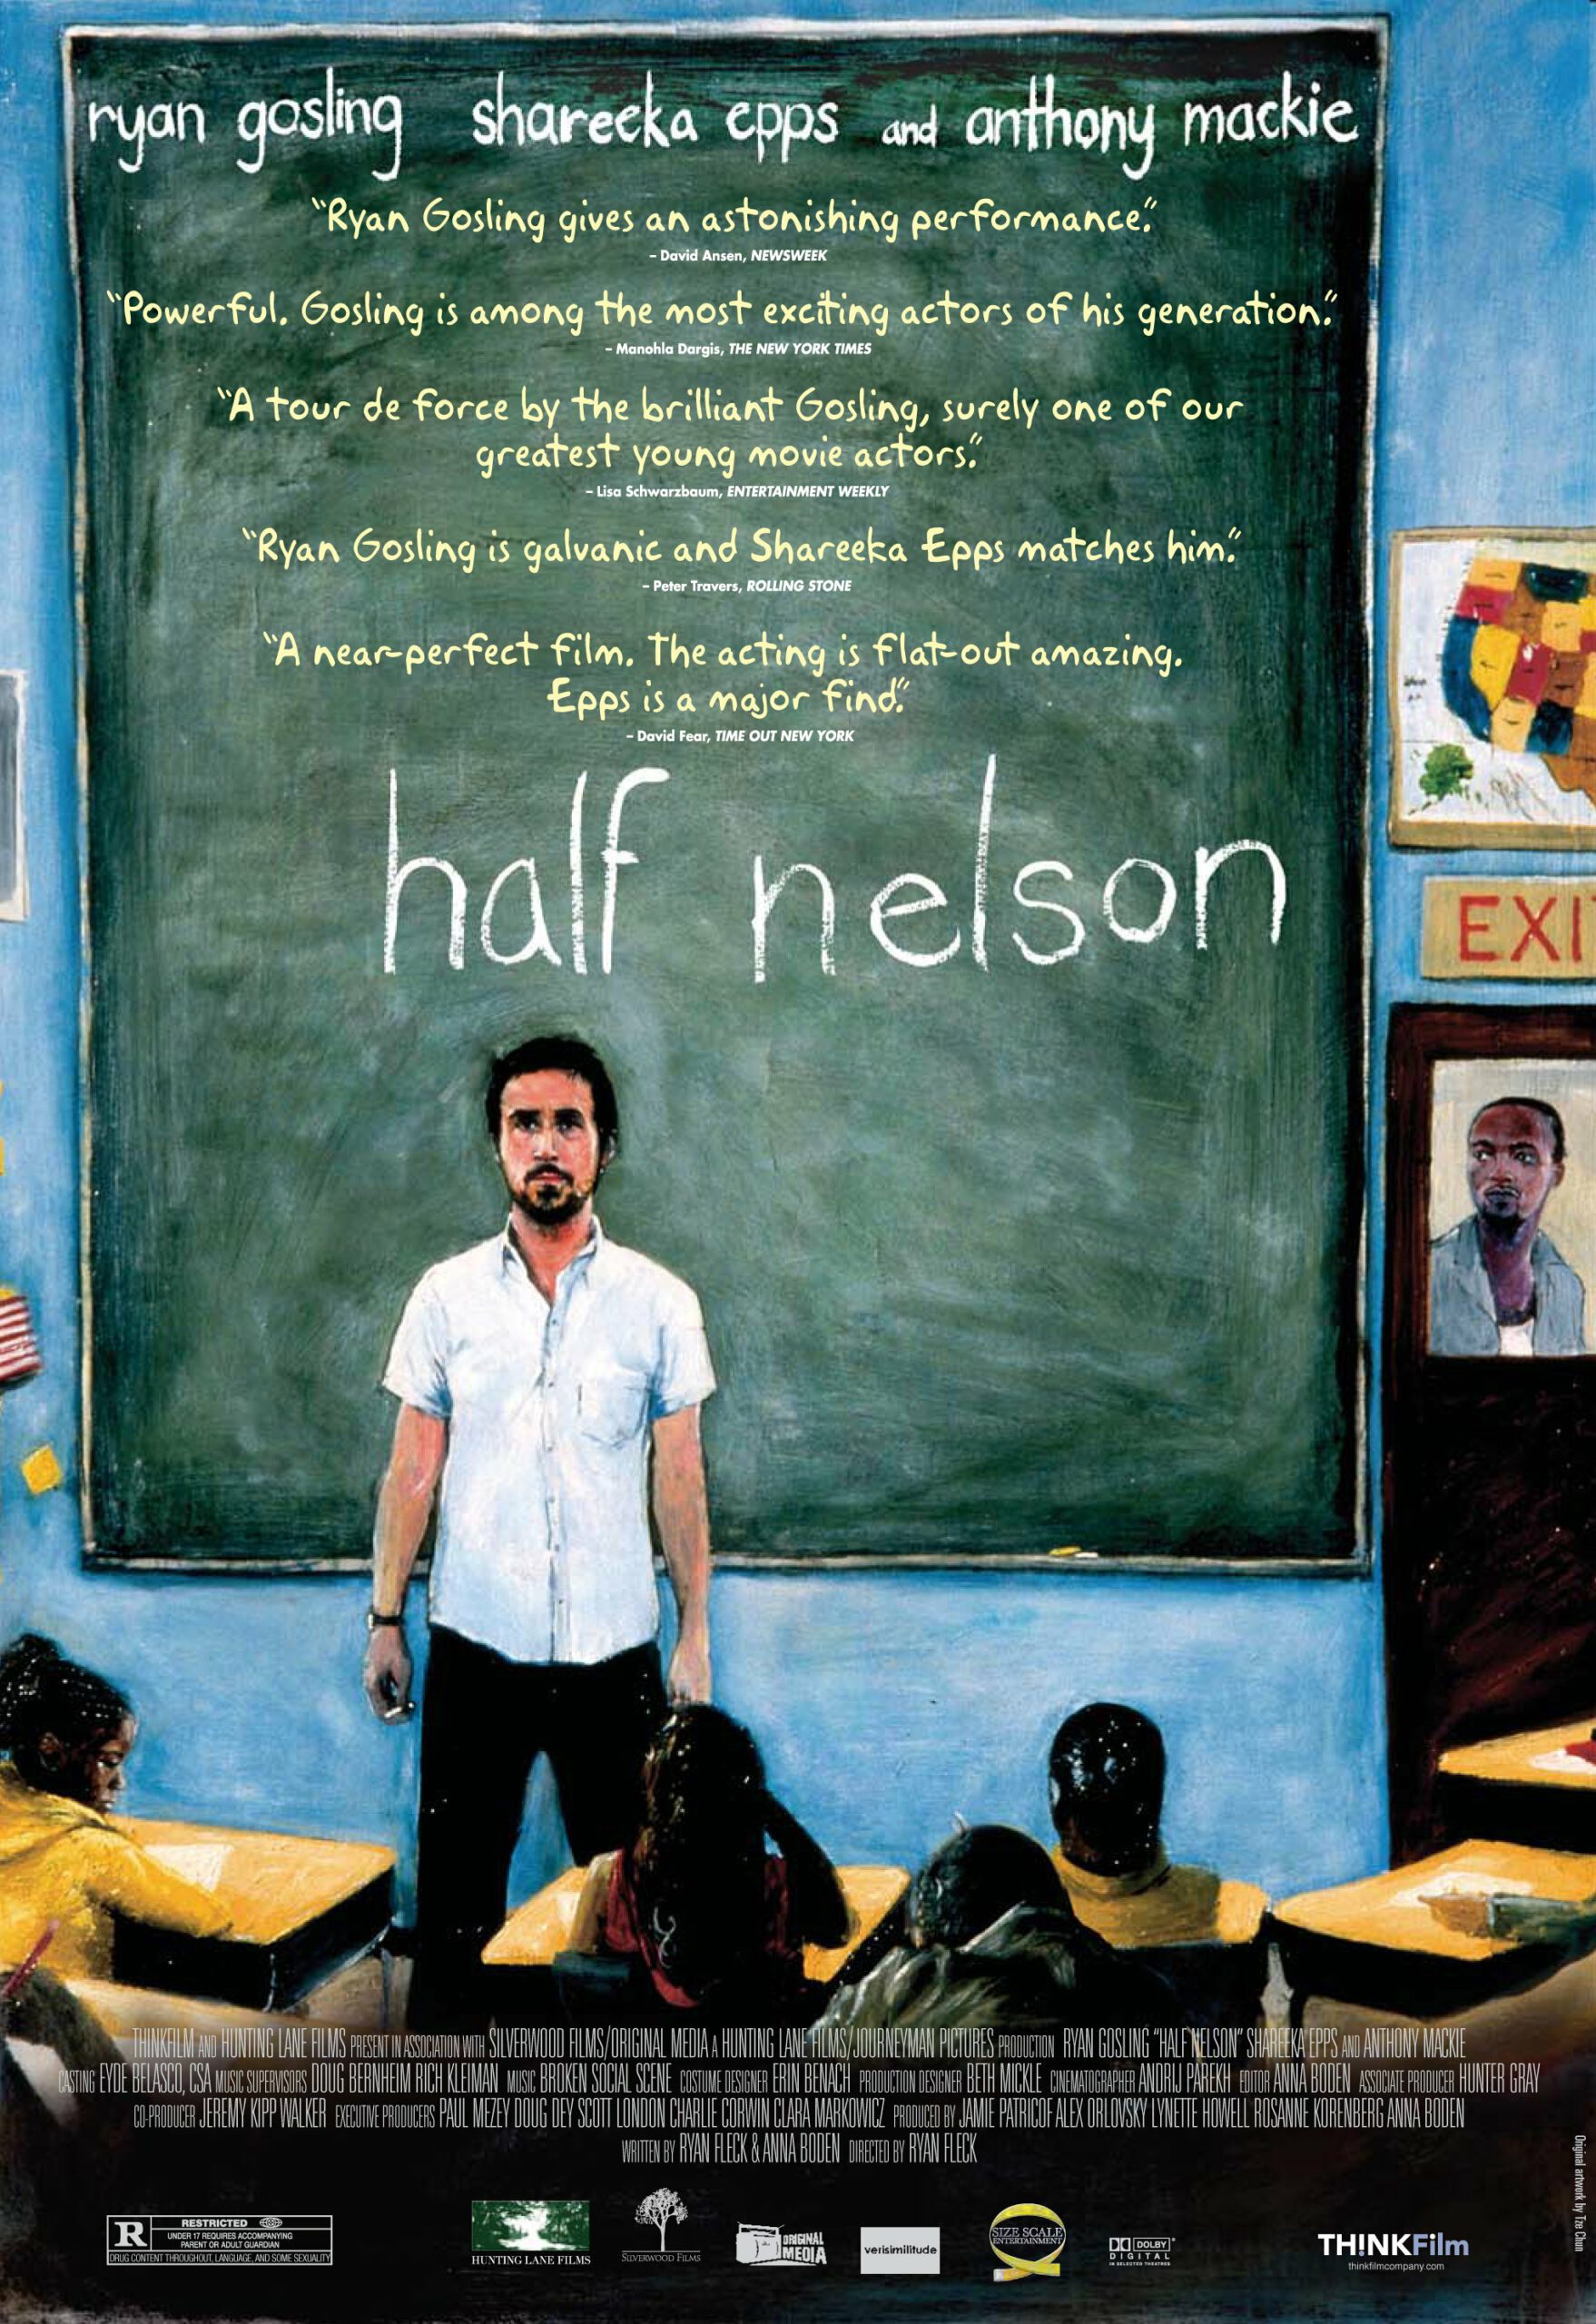 Half Nelson (2006) - Ryan Gosling Movies